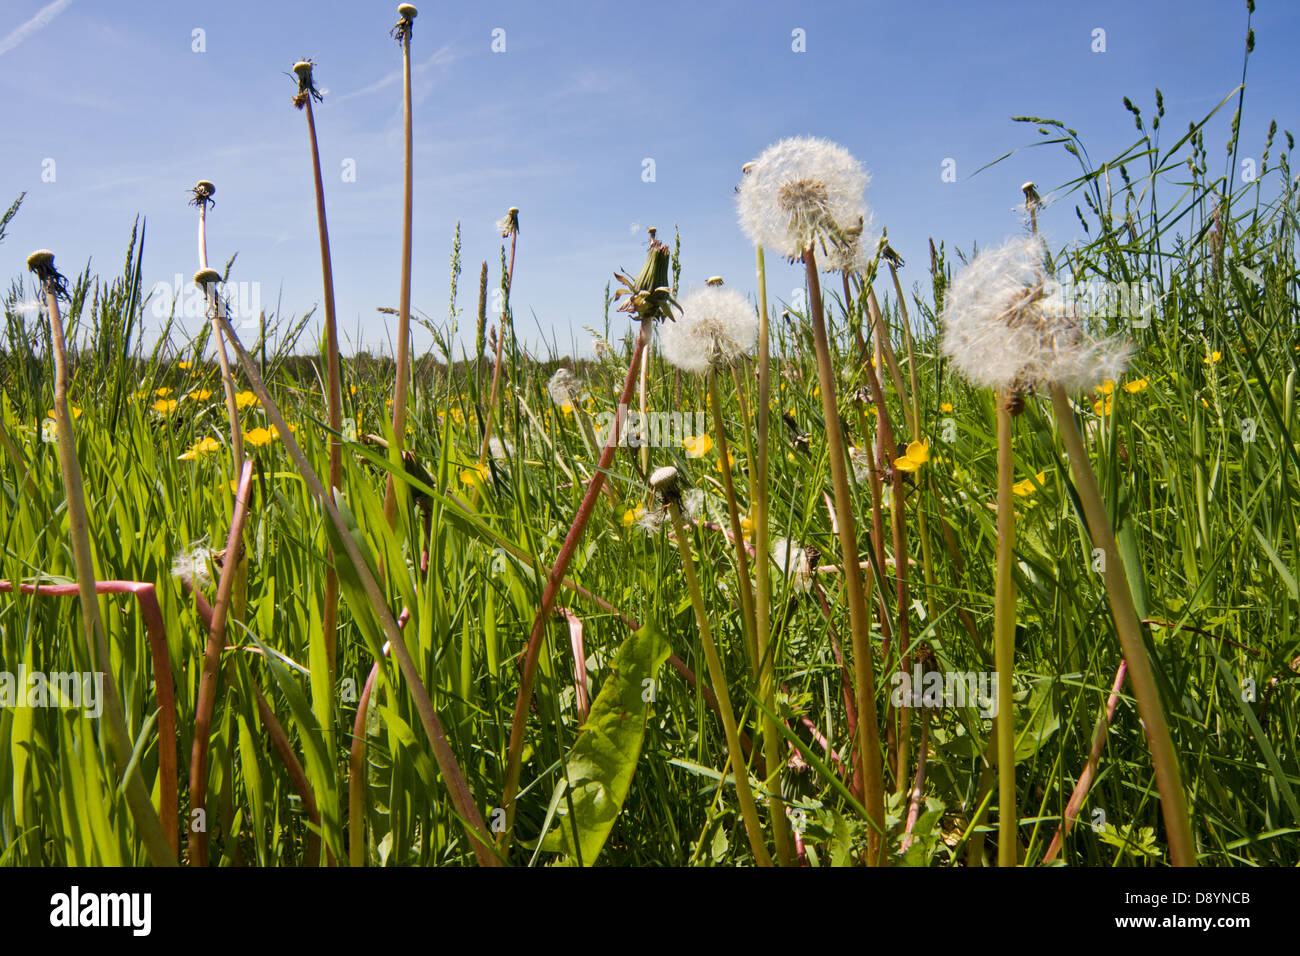 Ripe Dandelions (Taraxacum officinalis) in a grassy meadow under a blue sky Stock Photo